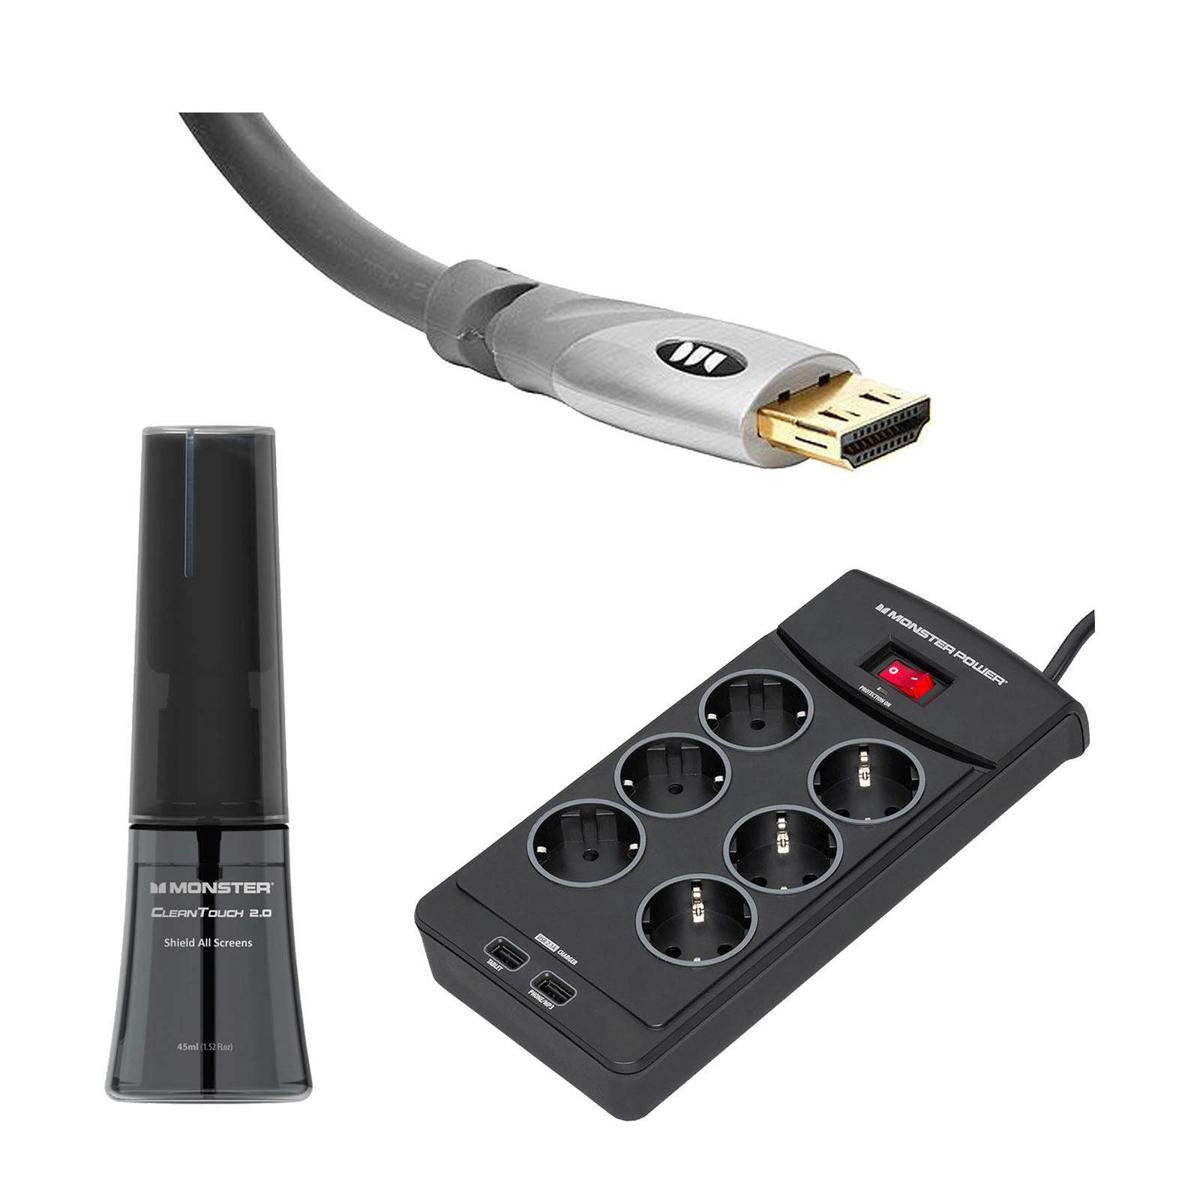 pomp Immuniteit huurder Monster HDMI kabel + Stekkerdoos + Reinigingsmiddel bundel | wehkamp